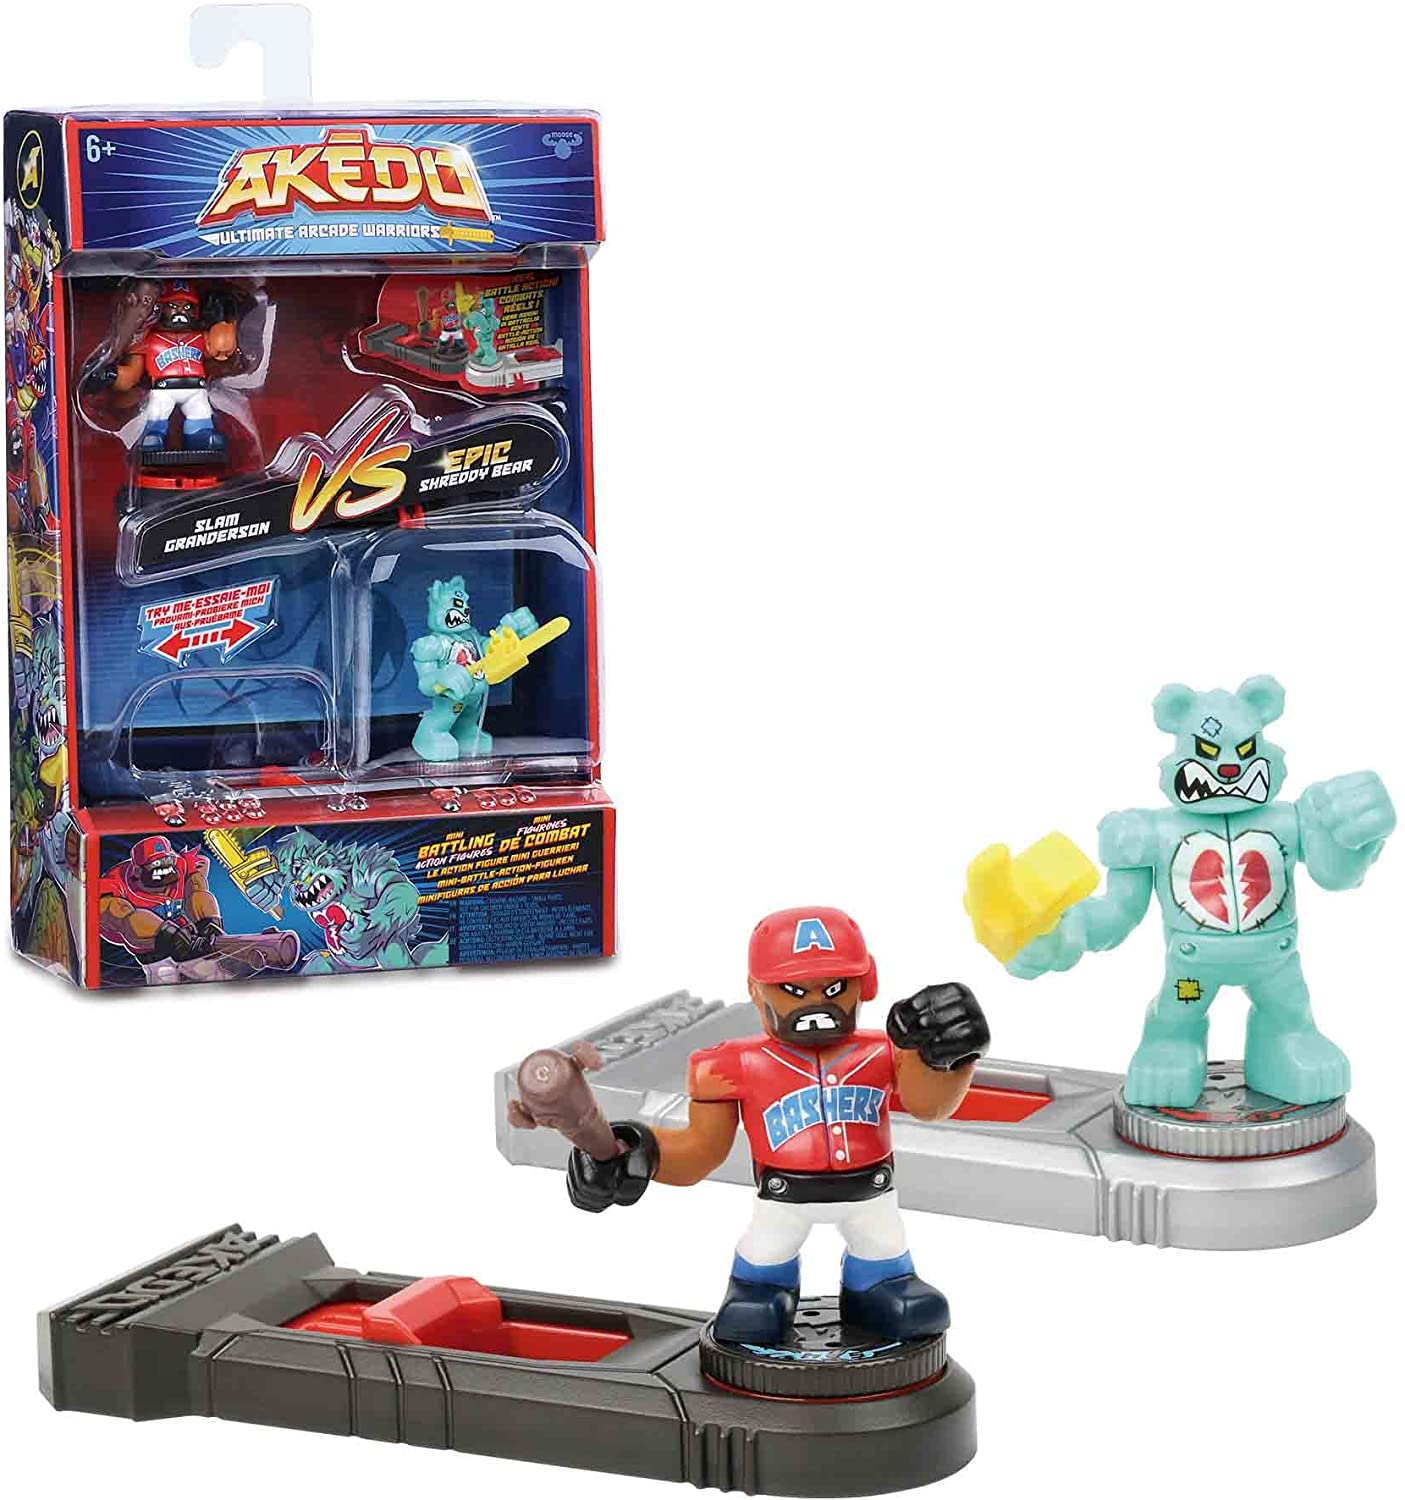 AKEDO - Versus Pack, figure di Arcade, con due bambole e 2